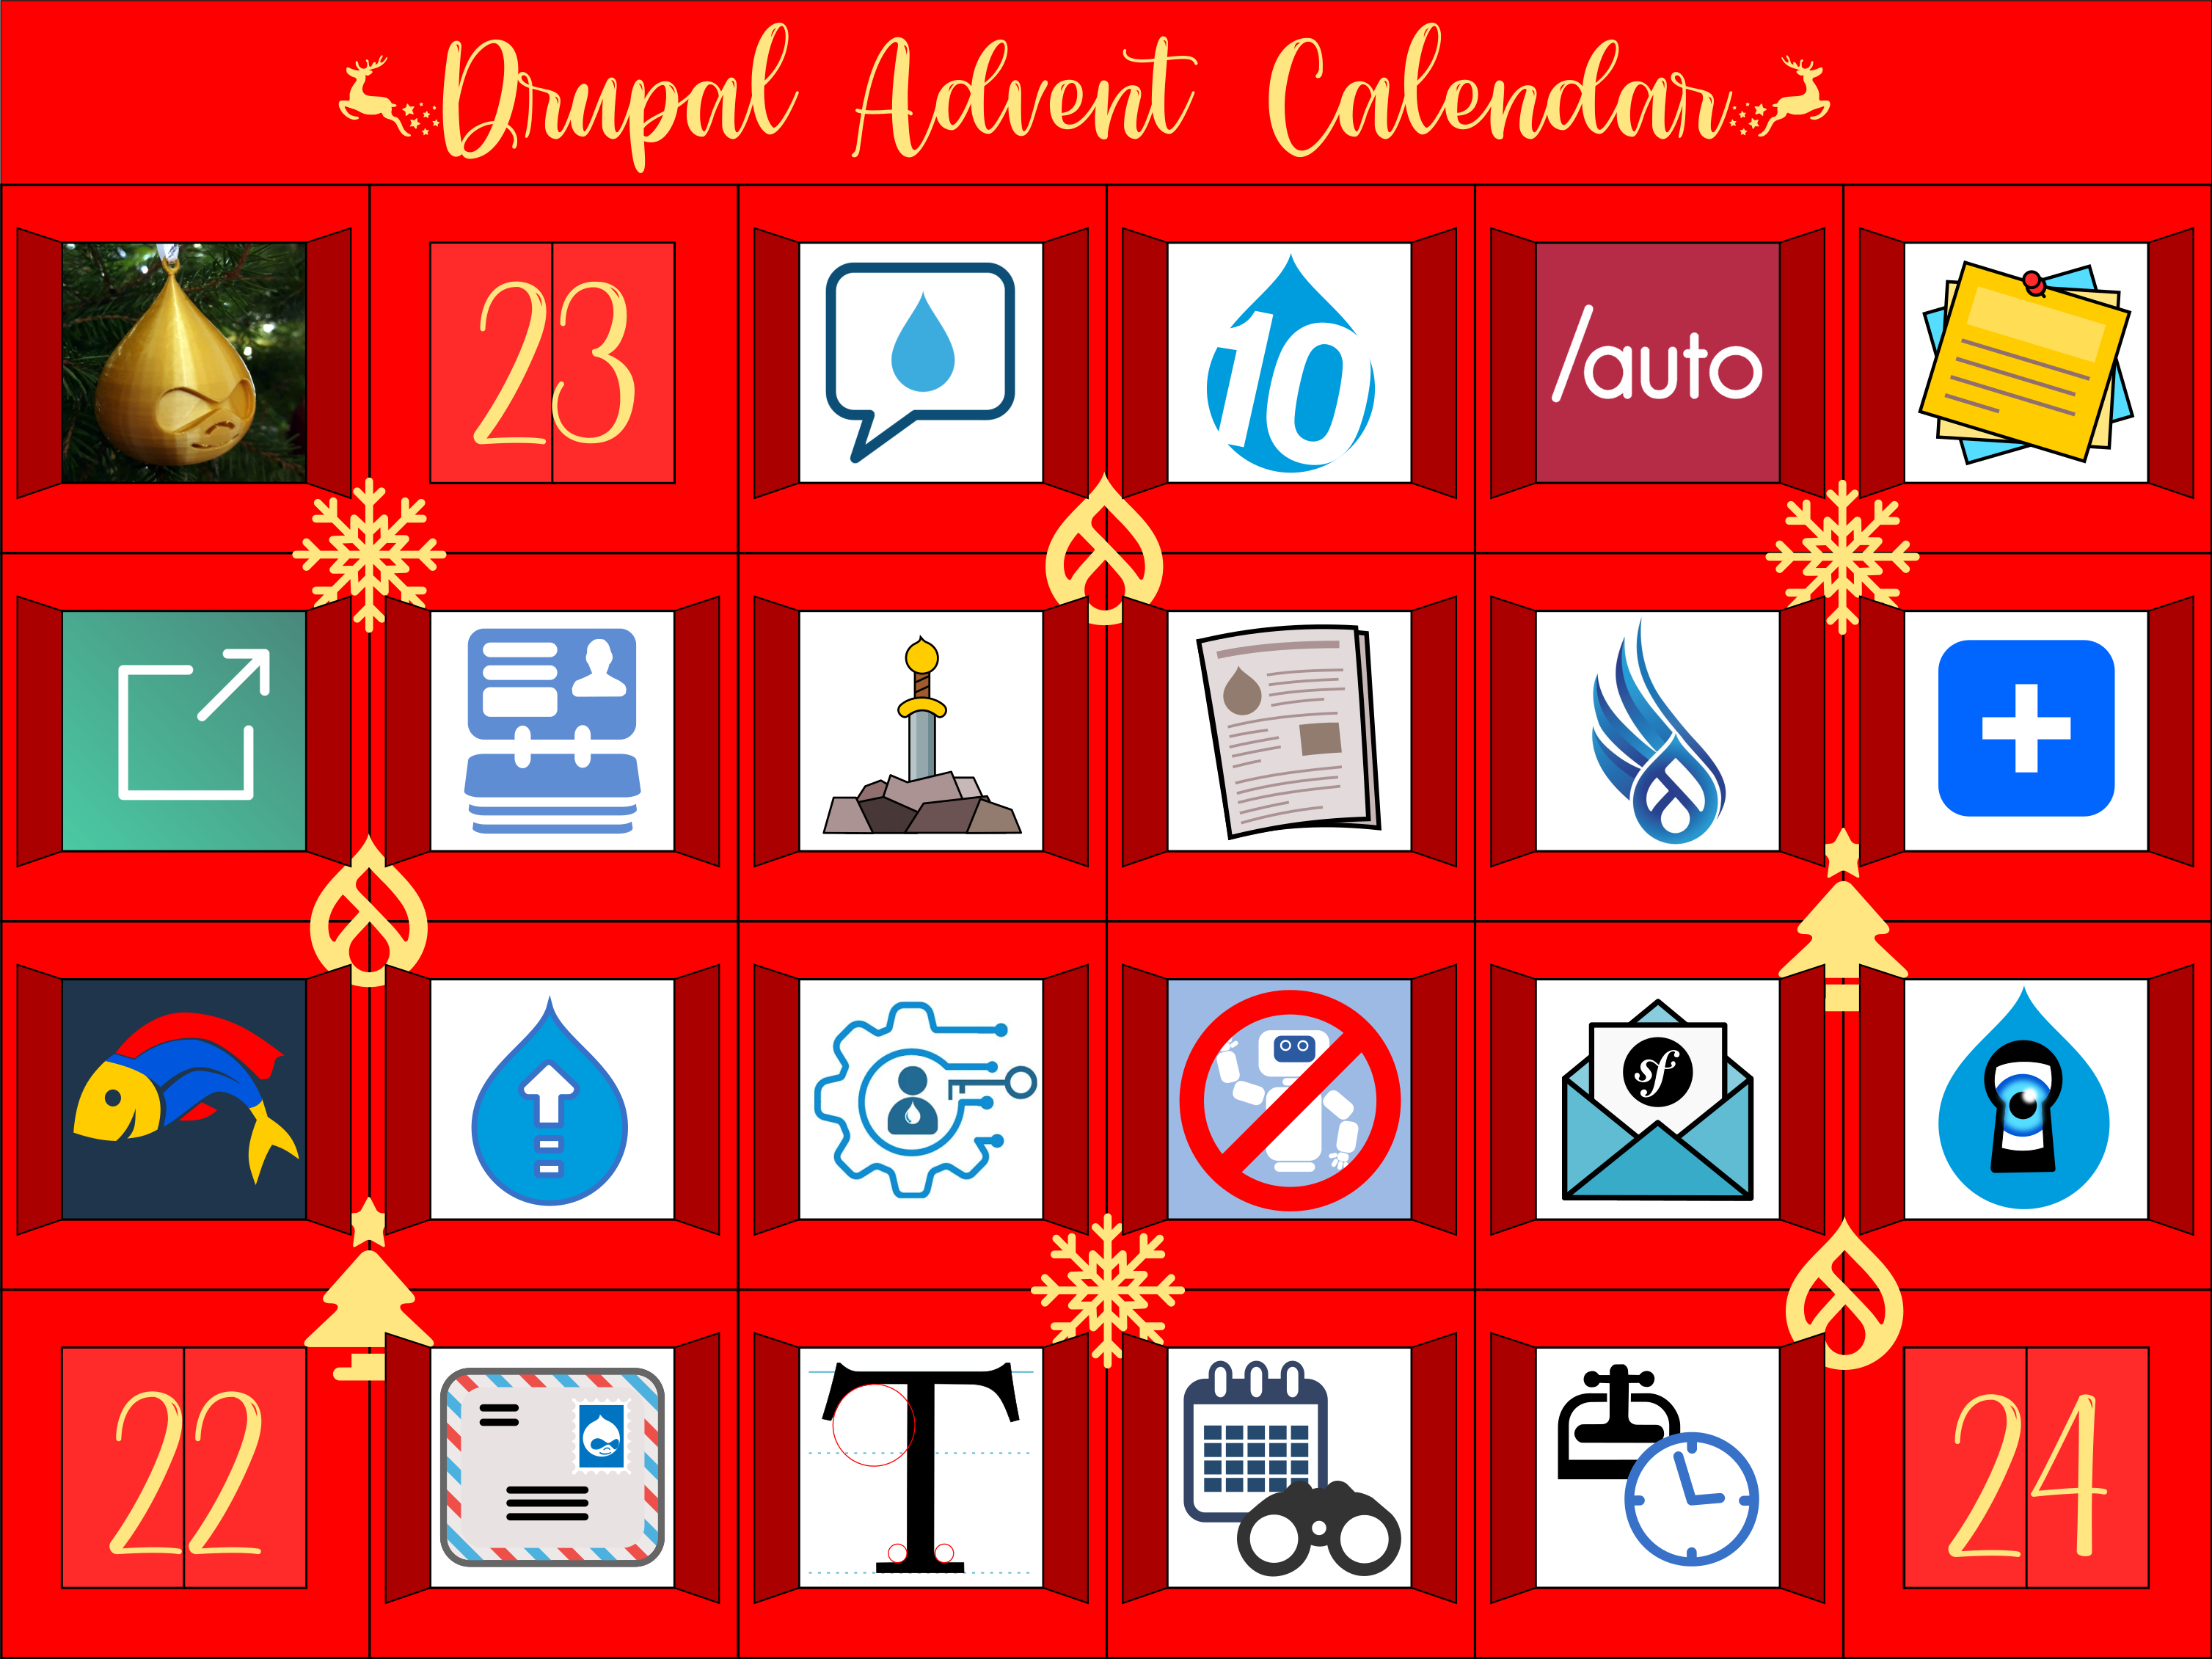 Advent Calendar with door 21 open, revealing the DrupalPod icon